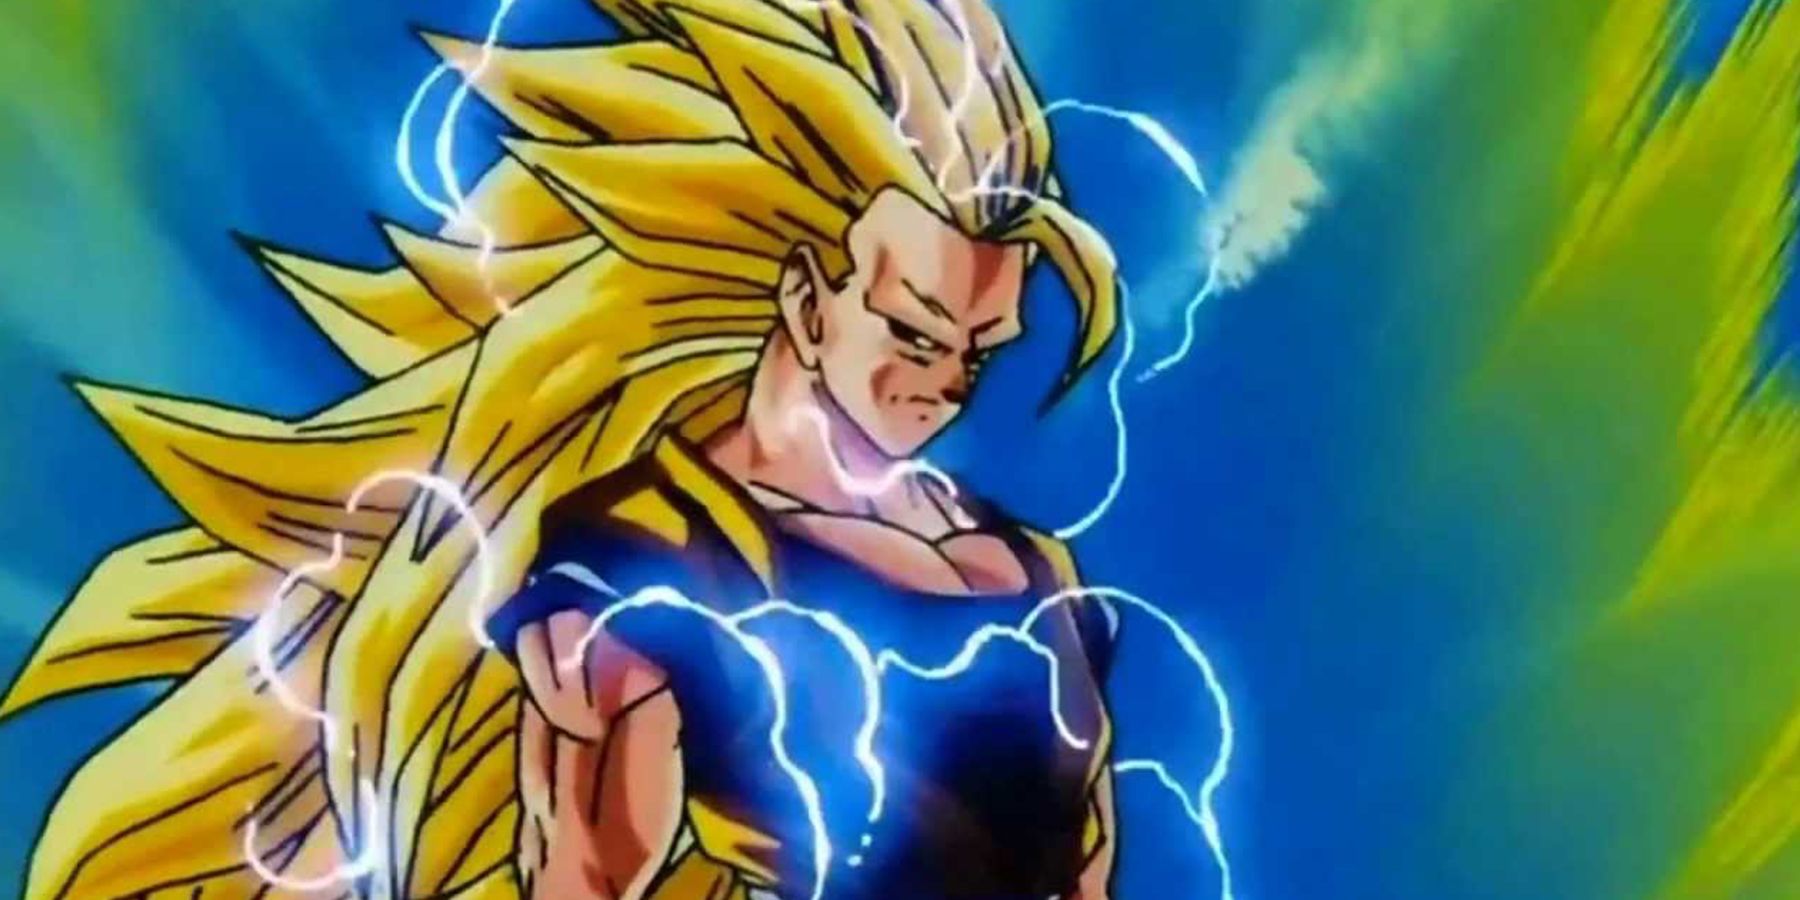 Goku In his Super Saiyan 3 transformation.